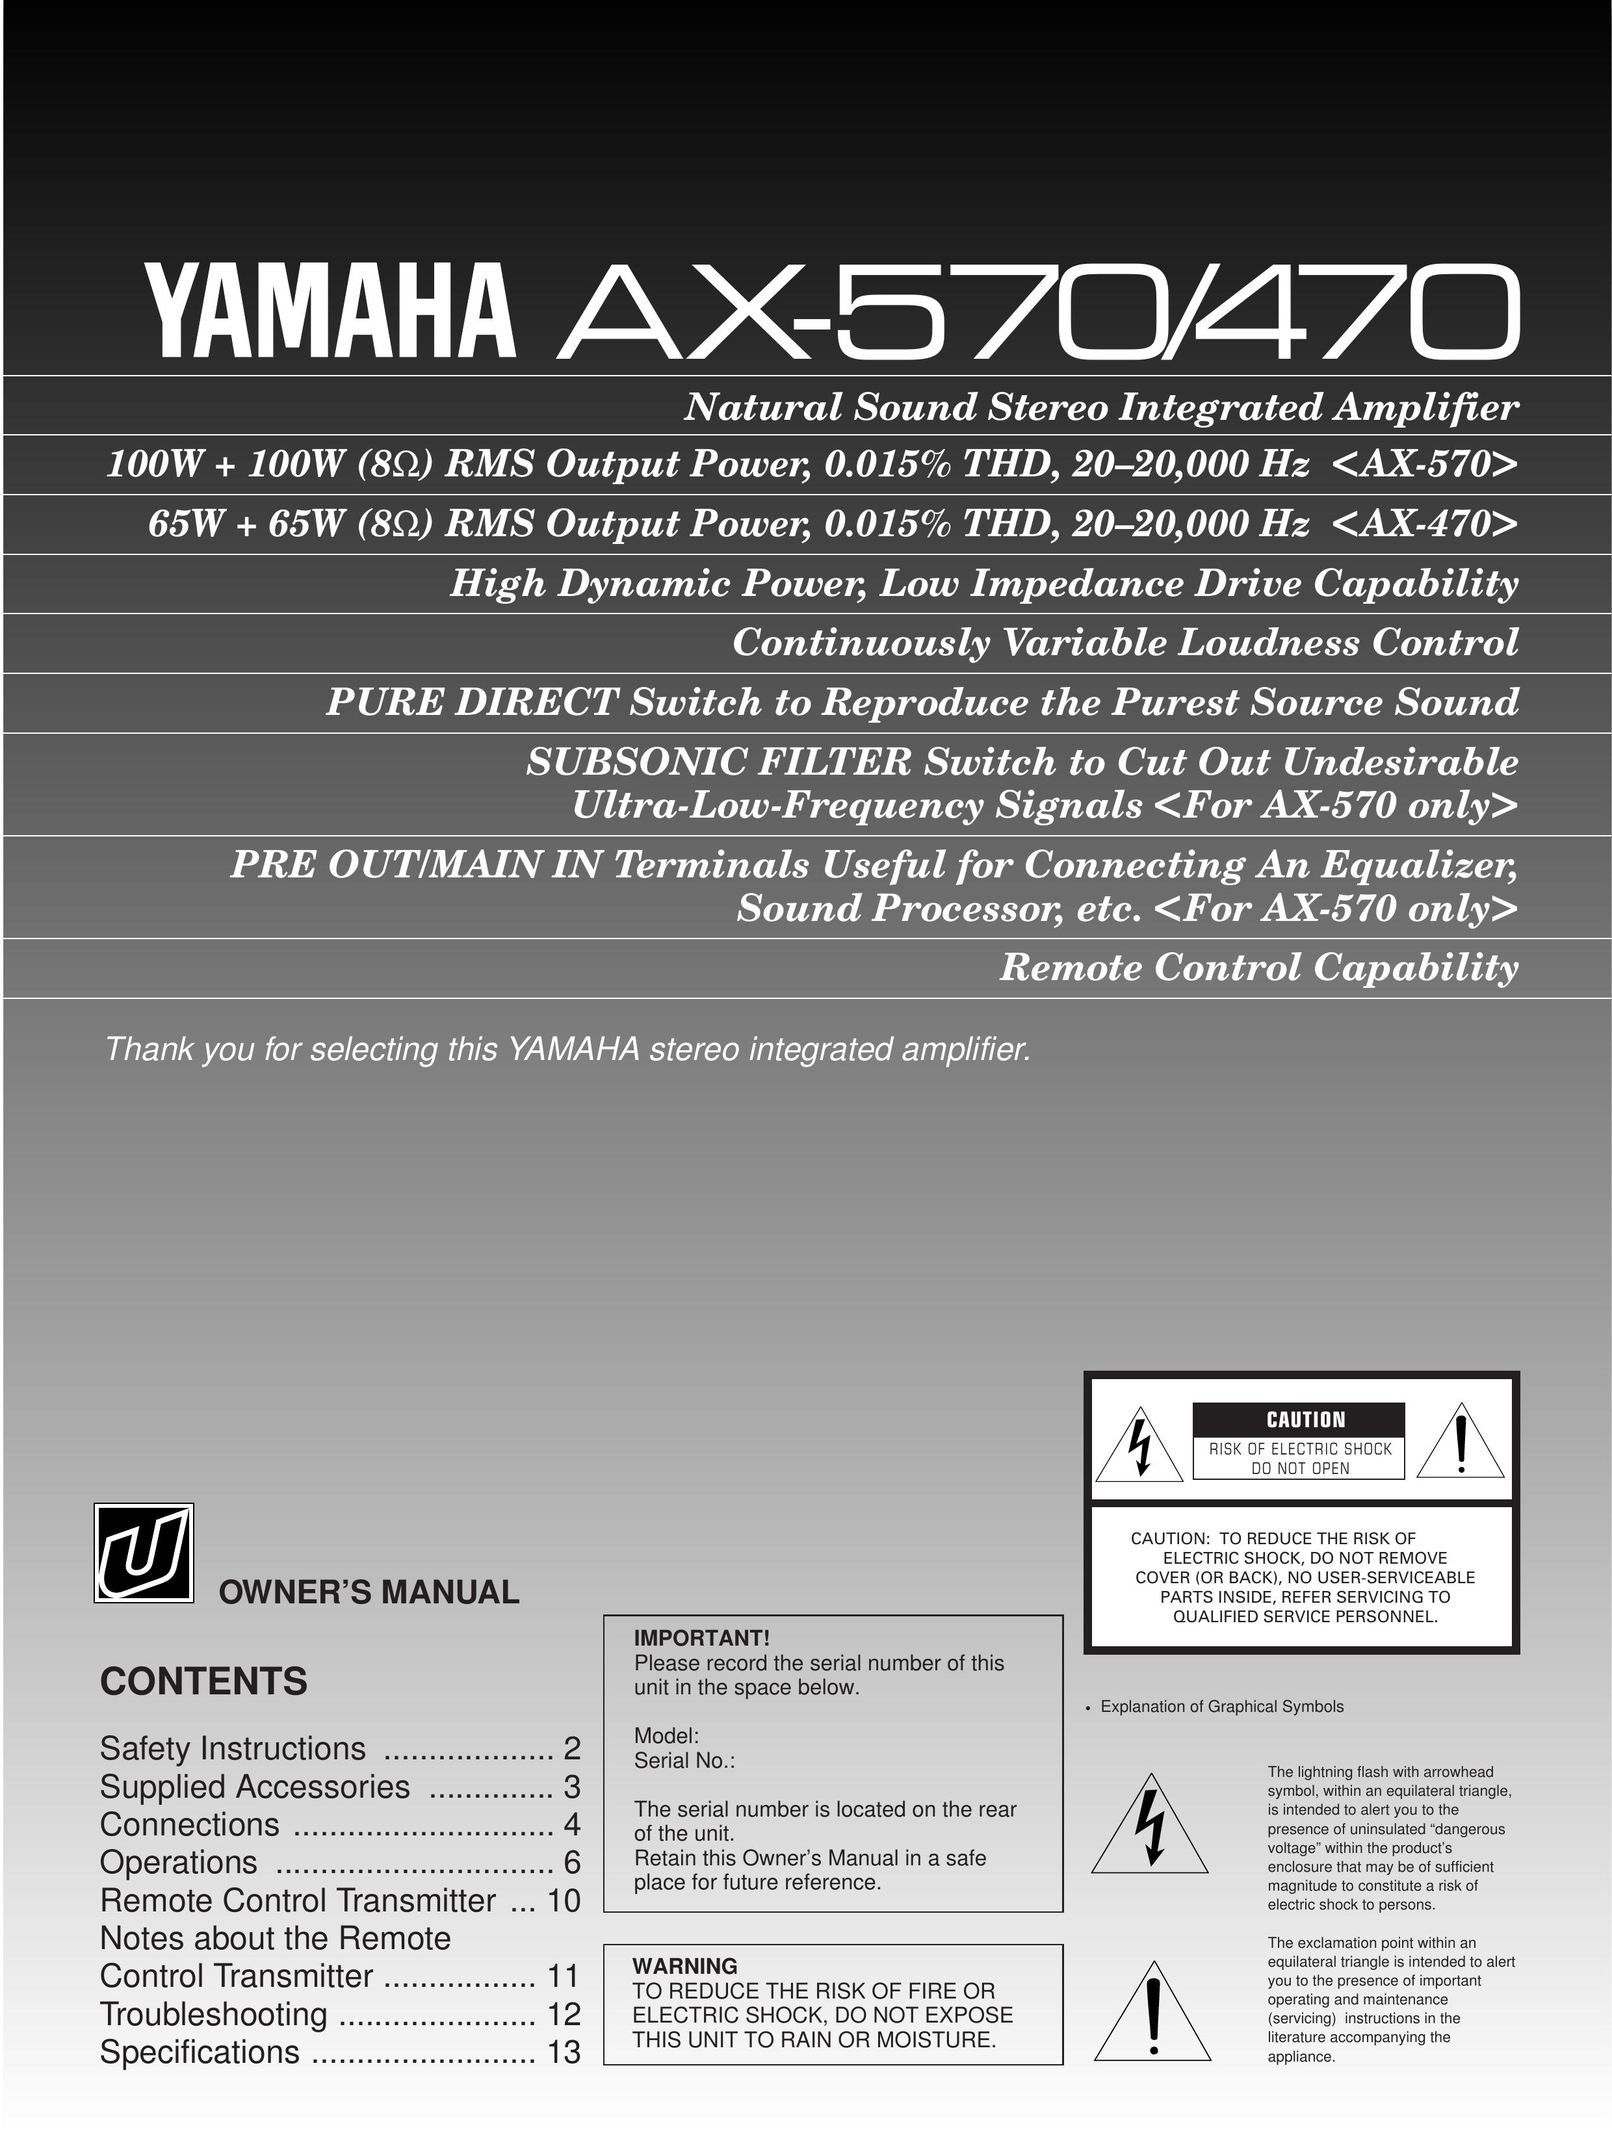 Yamaha AX-570 Stereo Amplifier User Manual